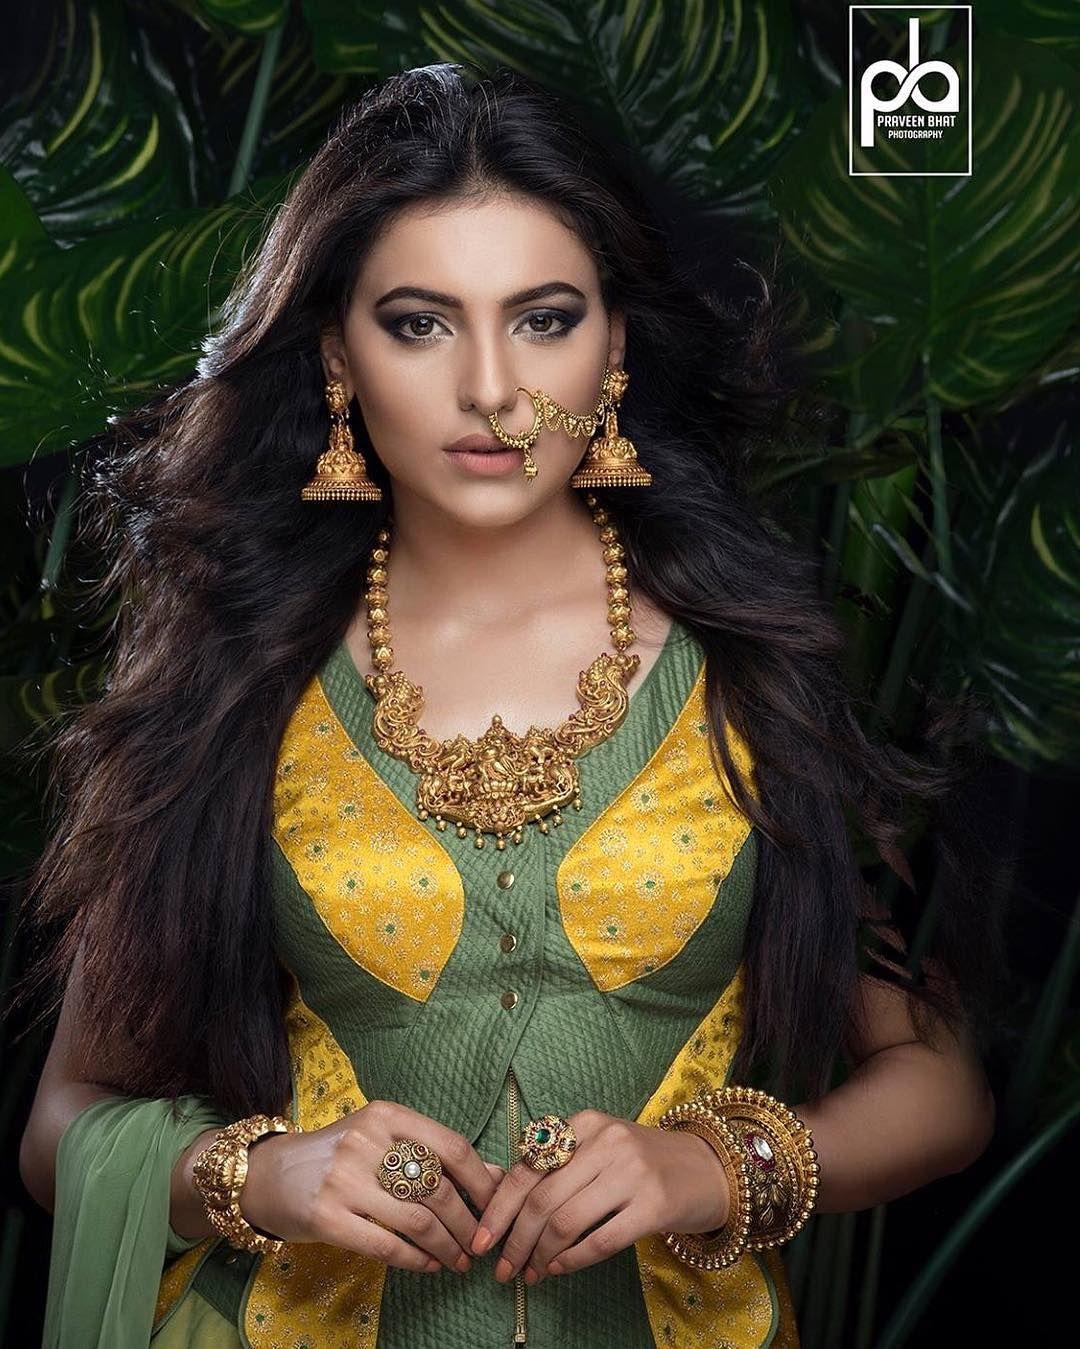 Punjabi Model Ginni Kapoor Images Beautiful Pics & Hot Pictures Gallery